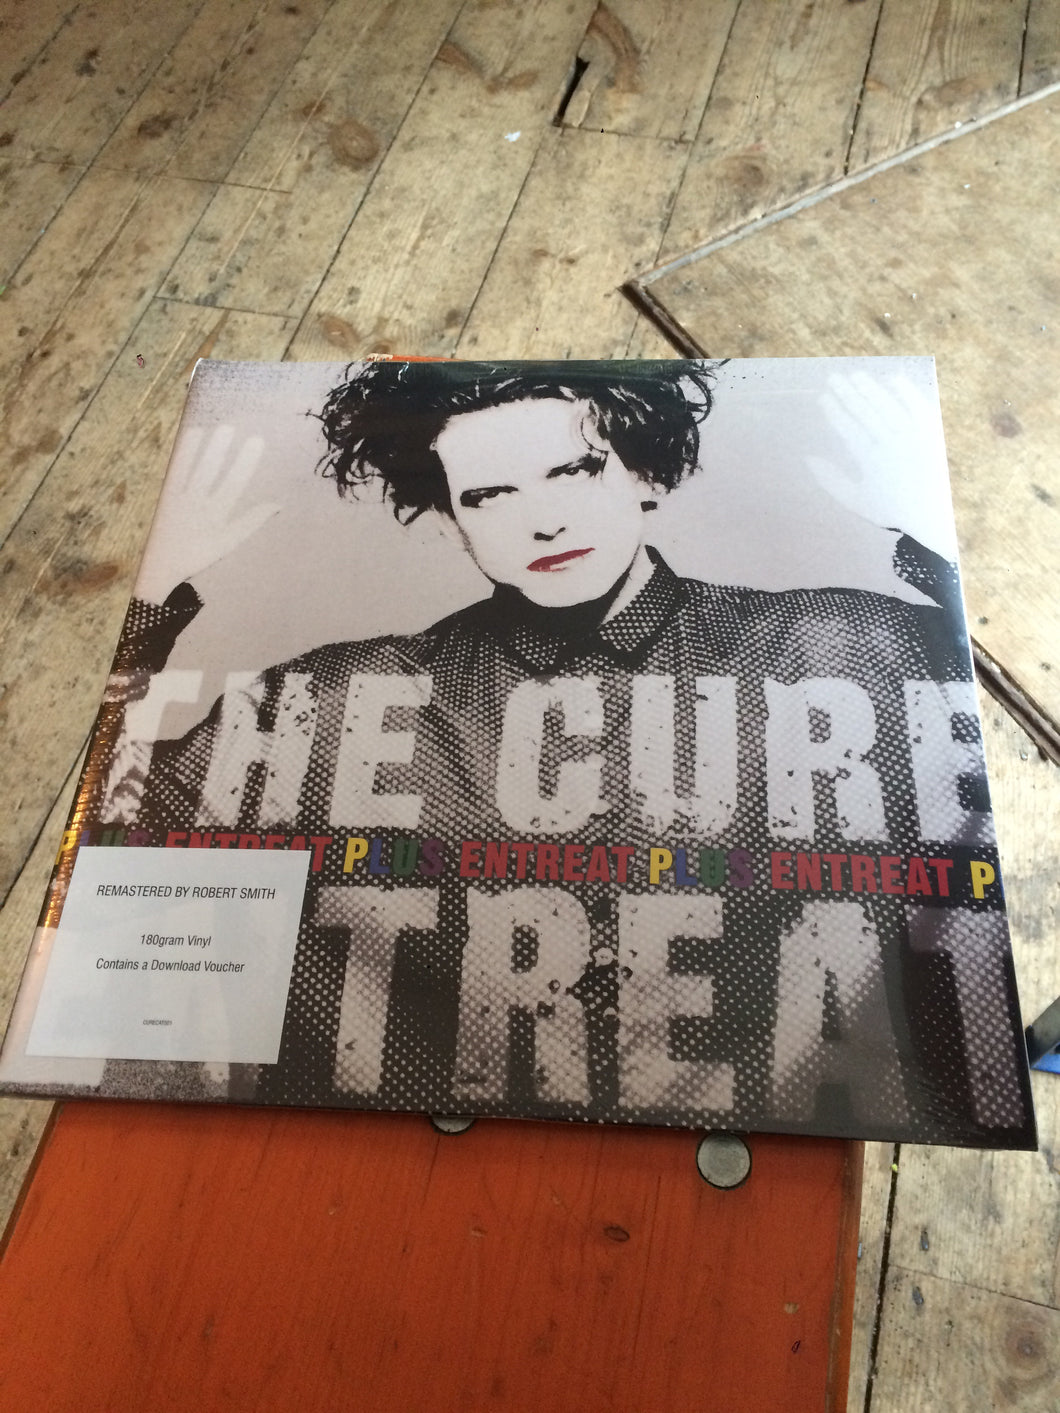 The Cure - Entreat Plus